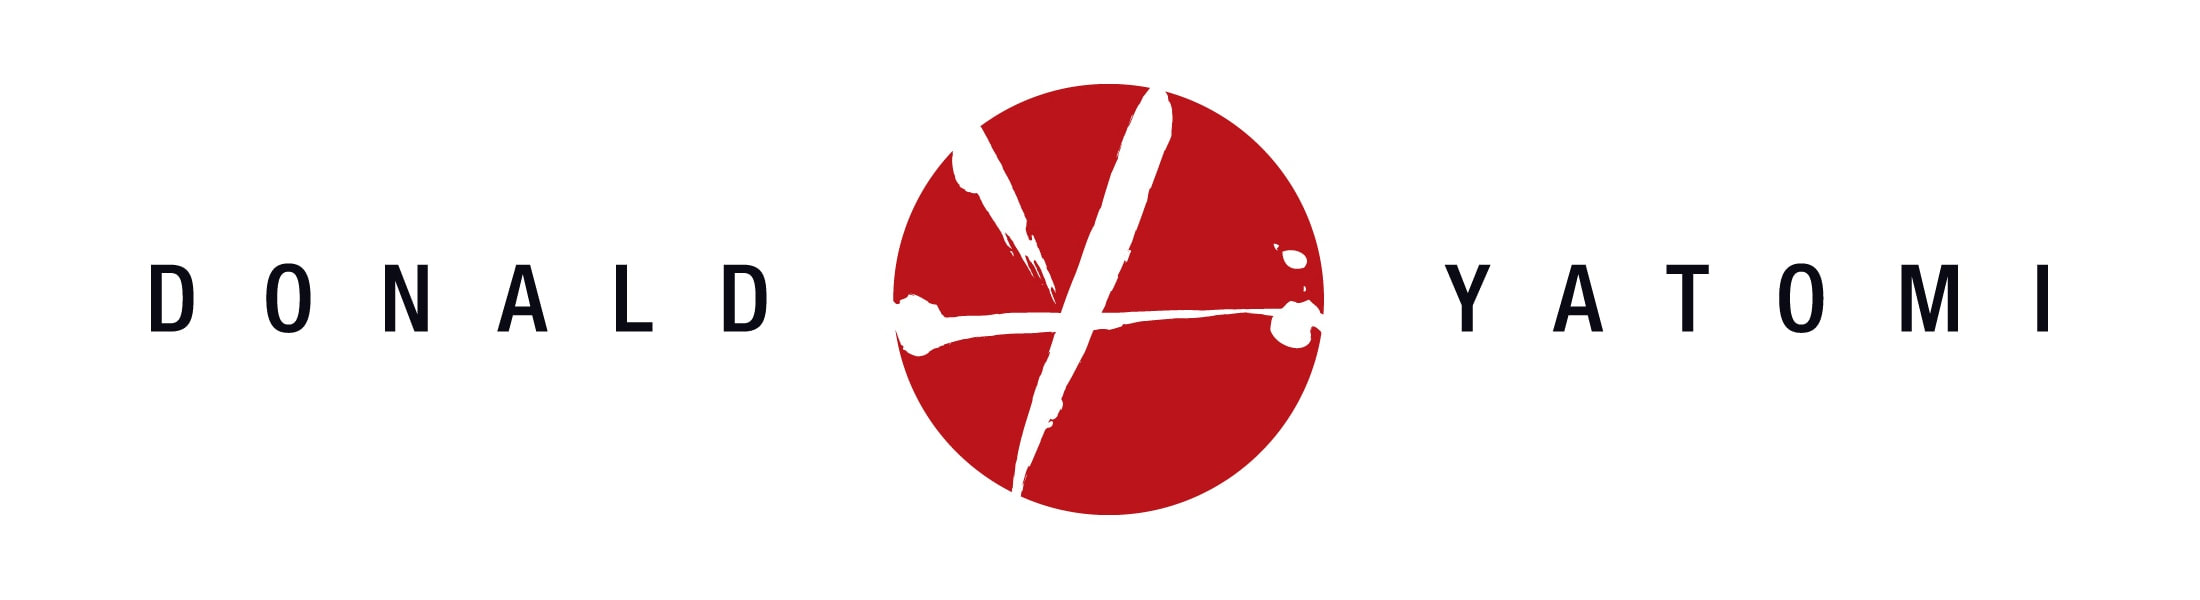 Original Donald Yatomi logo